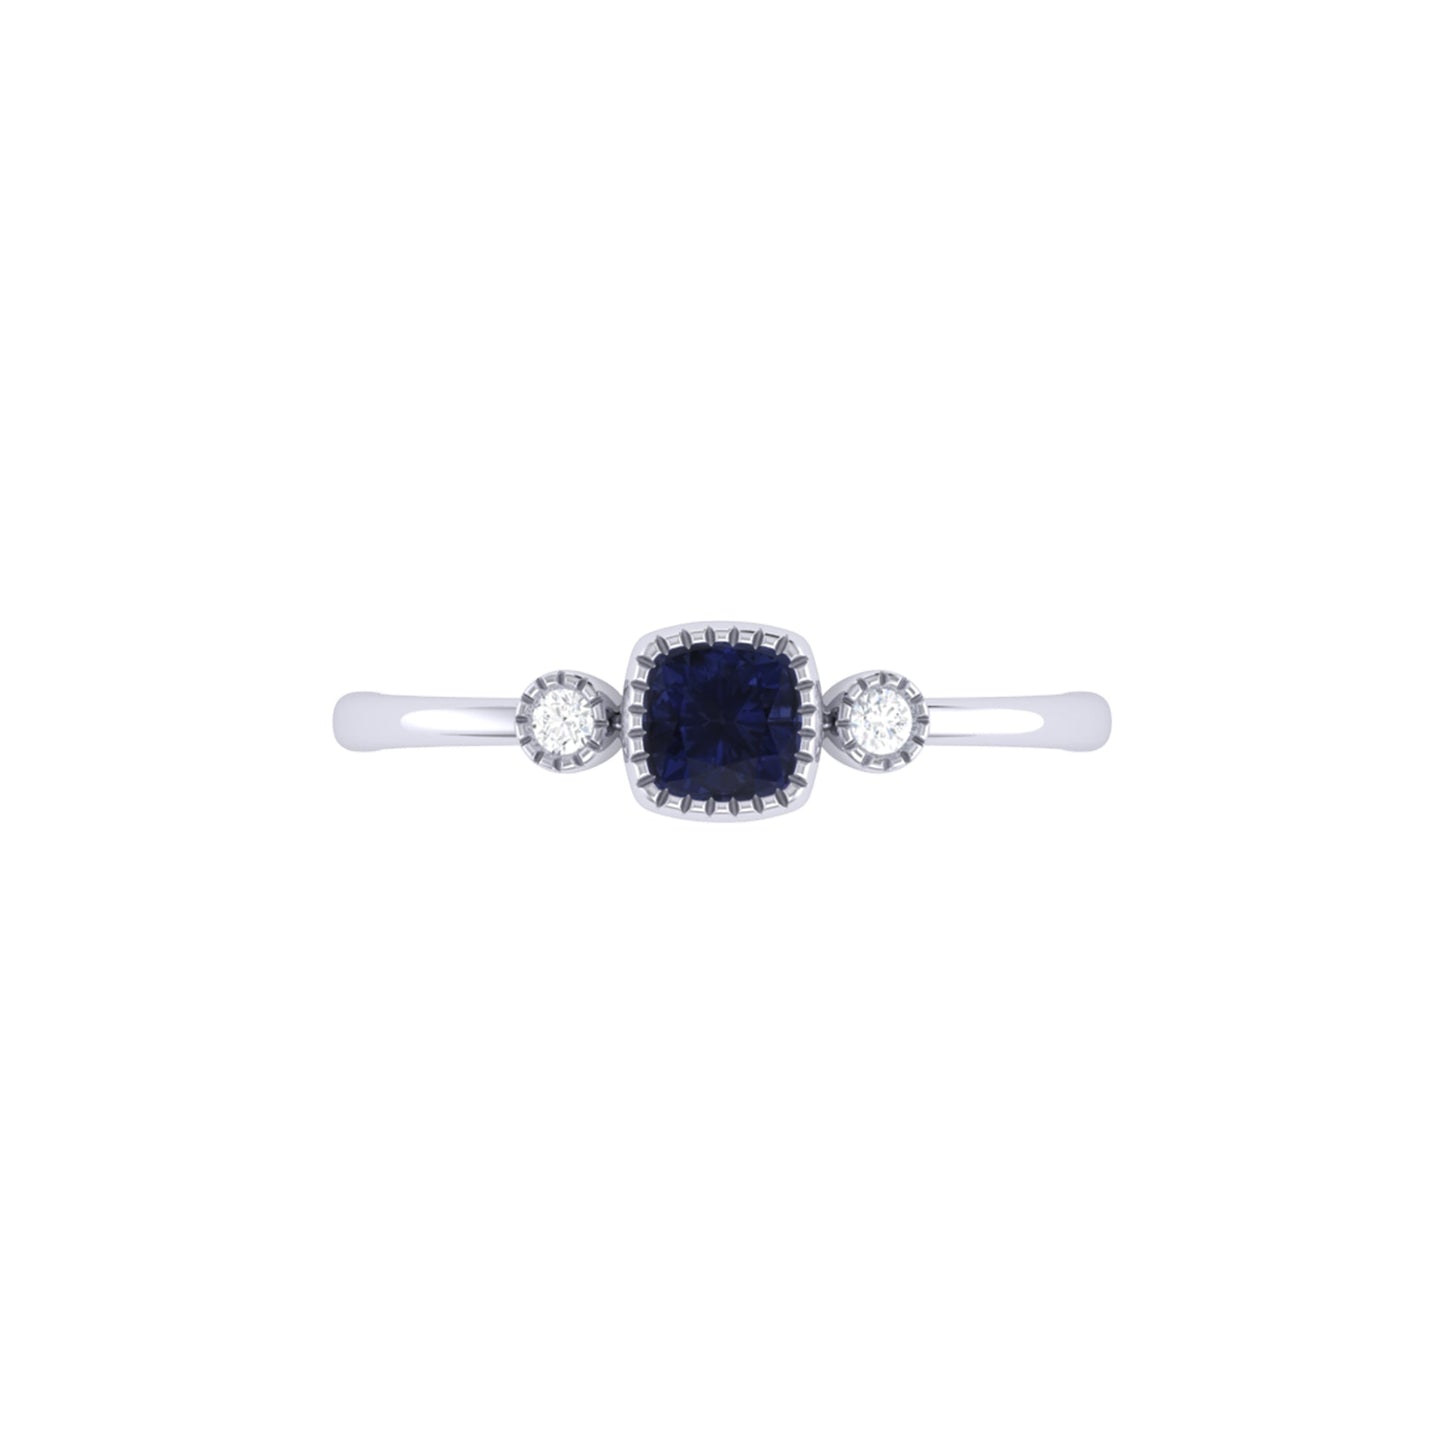 Cushion Cut Sapphire & Diamond Birthstone Ring In 14K White Gold by LuvMyJewelry